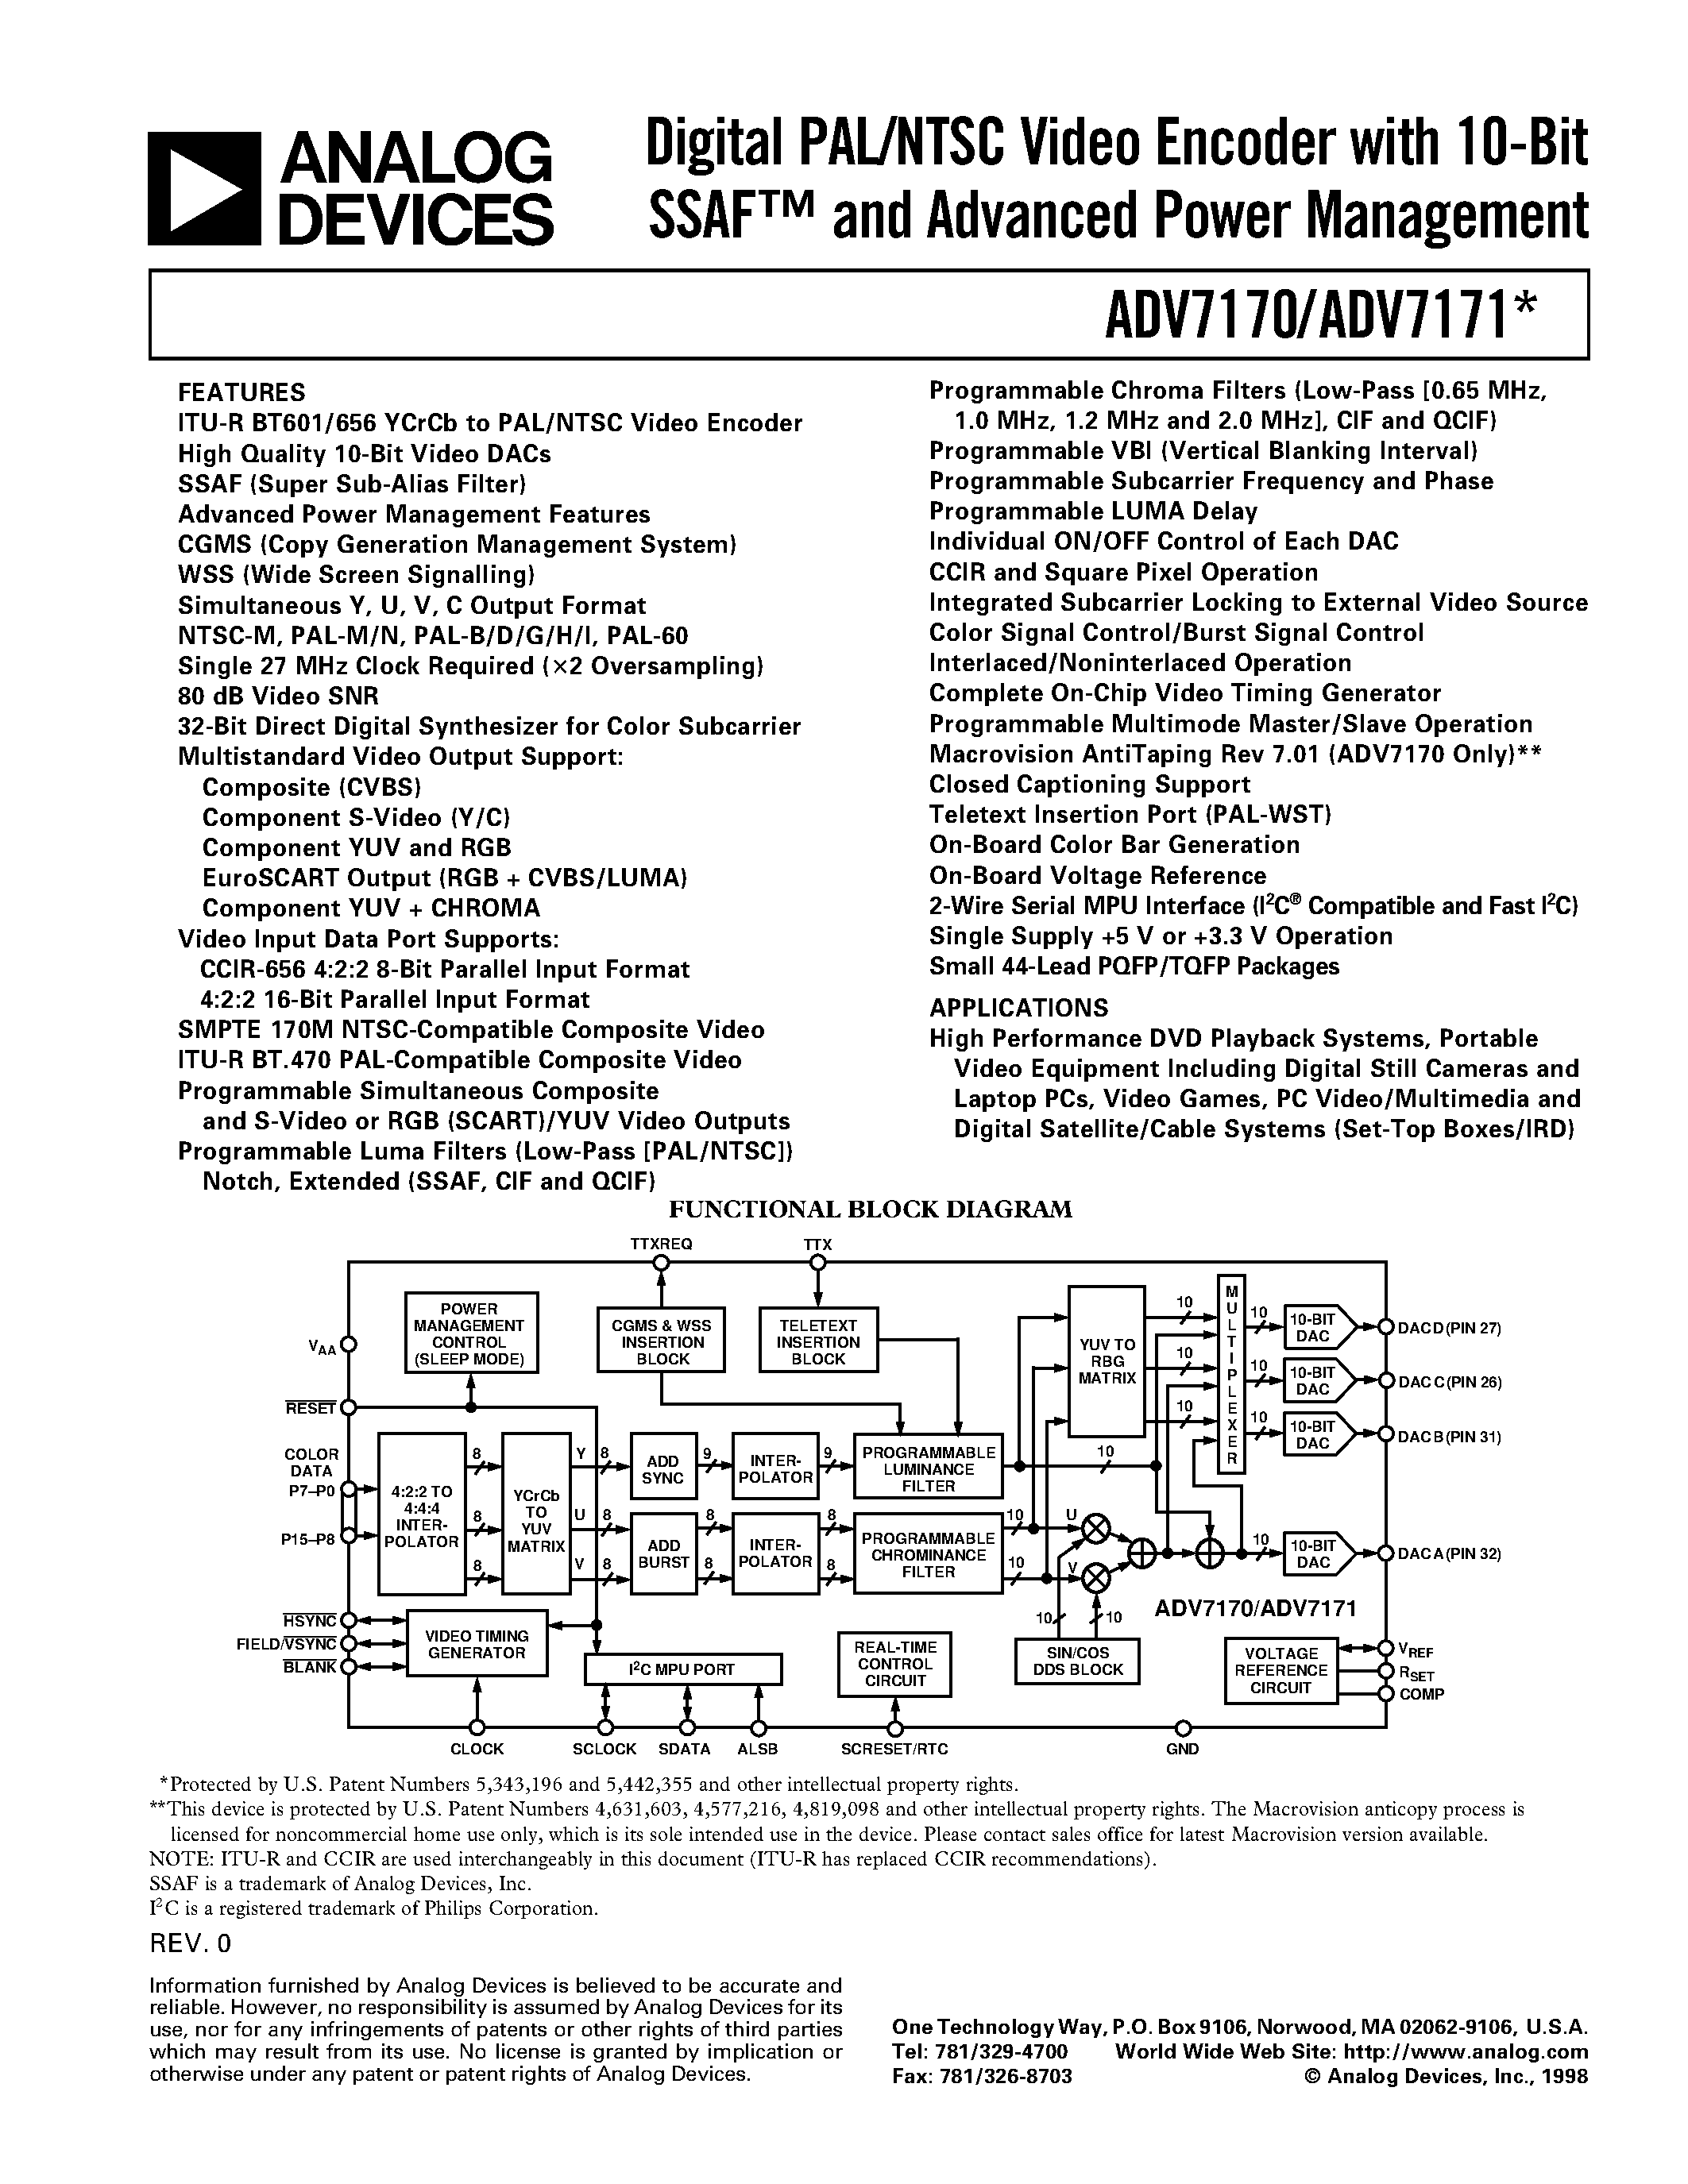 Datasheet ADV7171SU - Digital PAL/NTSC Video Encoder with 10-Bit SSAF and Advanced Power Management page 1